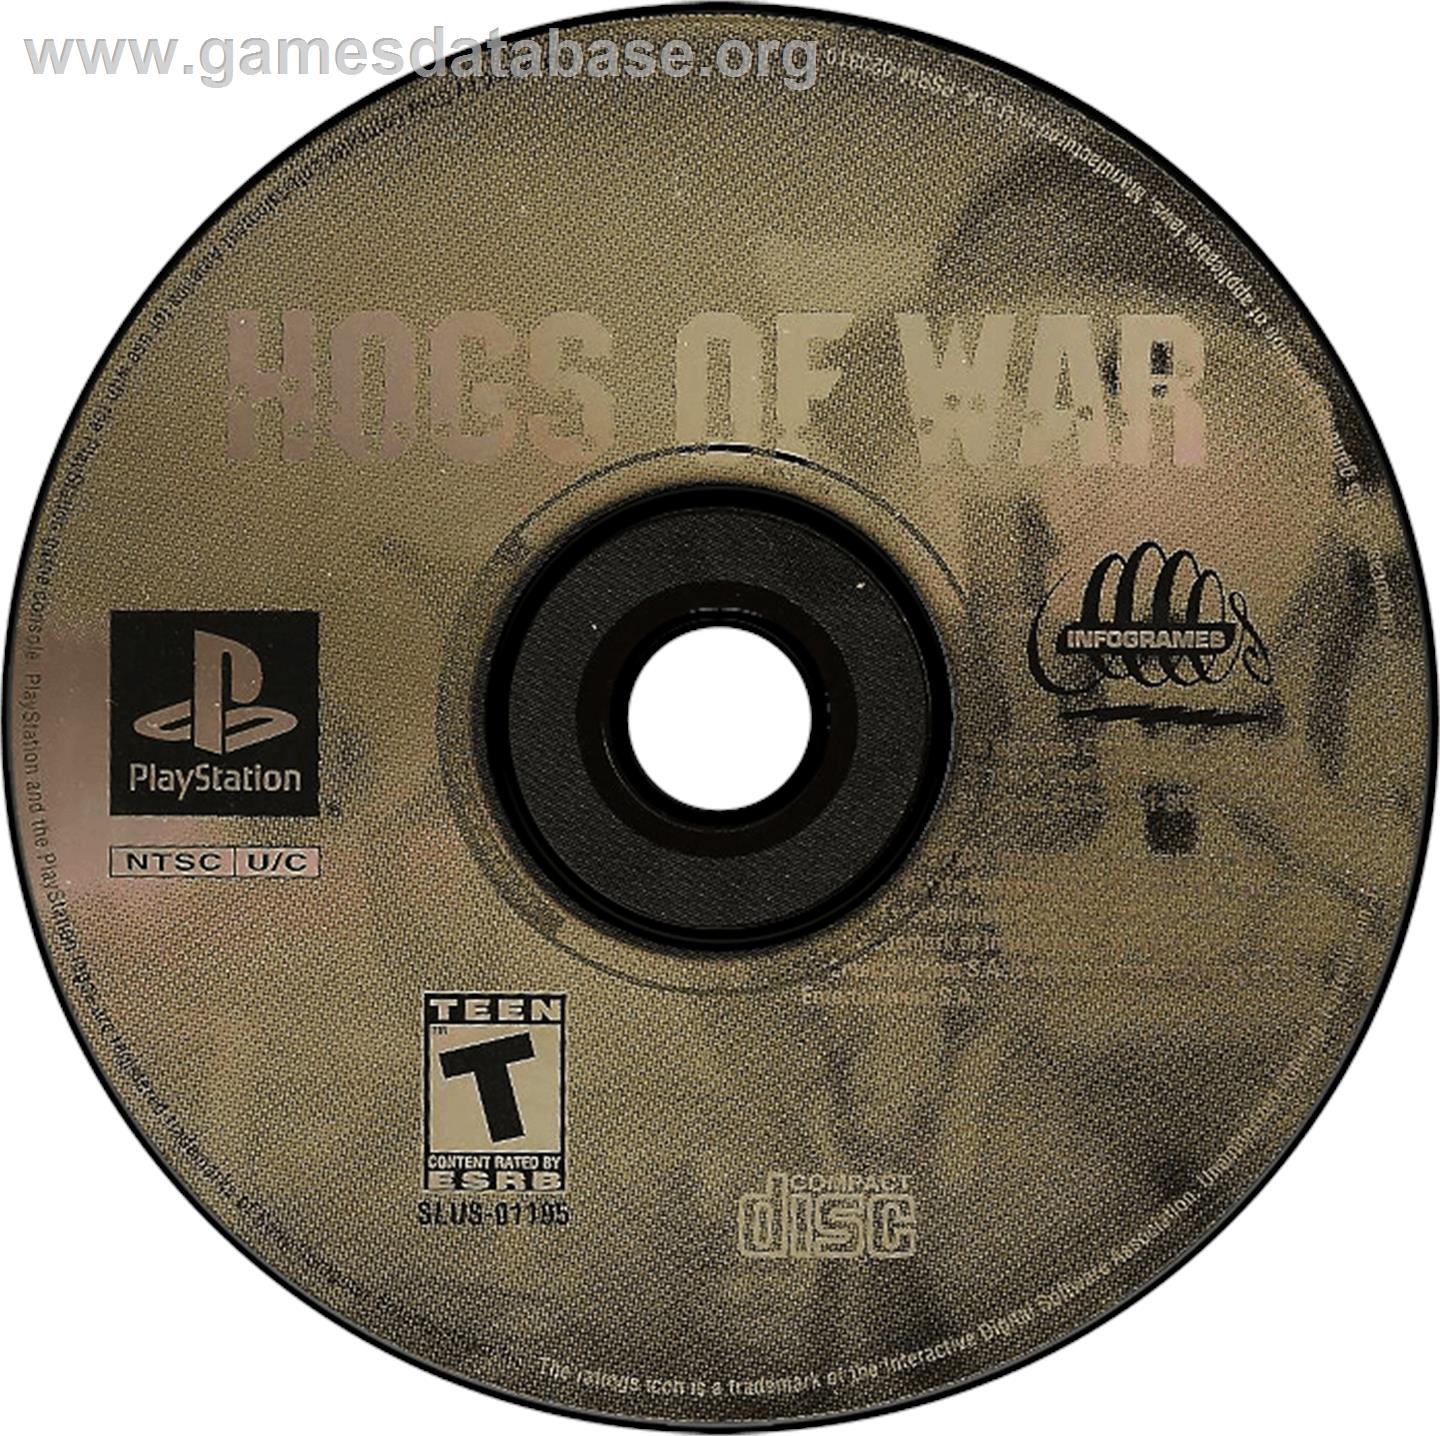 Hogs of War - Sony Playstation - Artwork - Disc